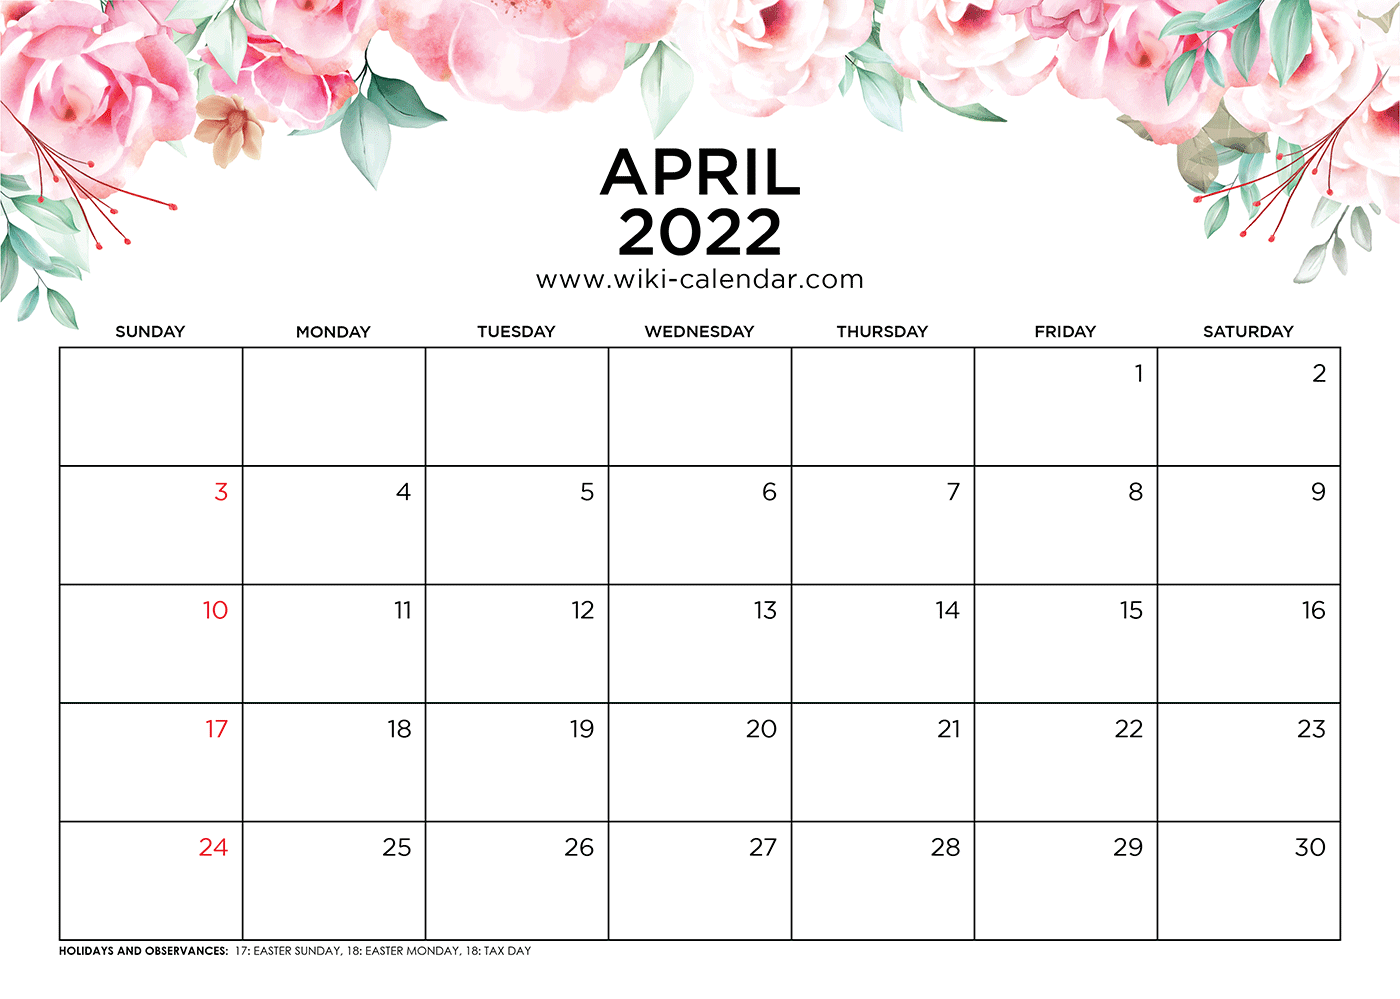 Spril 2022 Calendar Free Printable April 2022 Calendars - Wiki Calendar